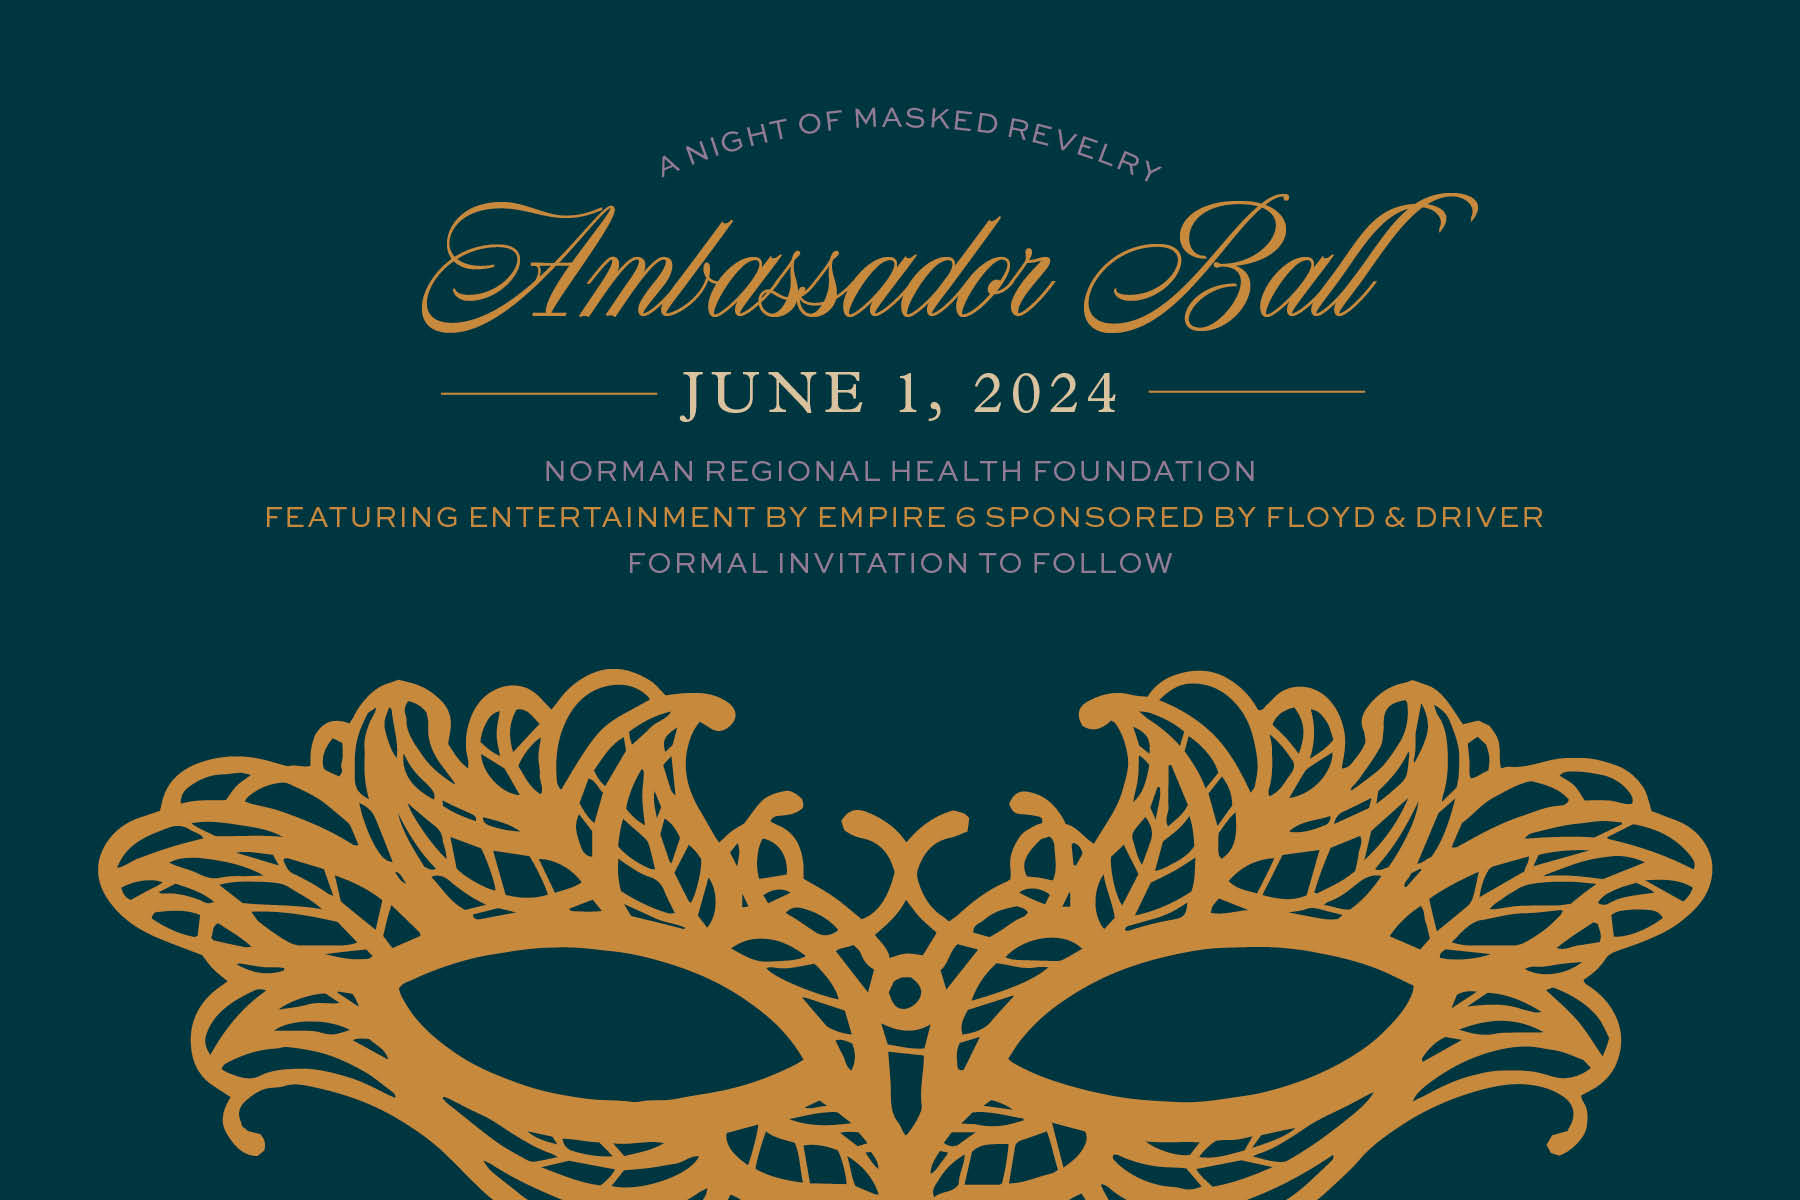 Ambassador Ball